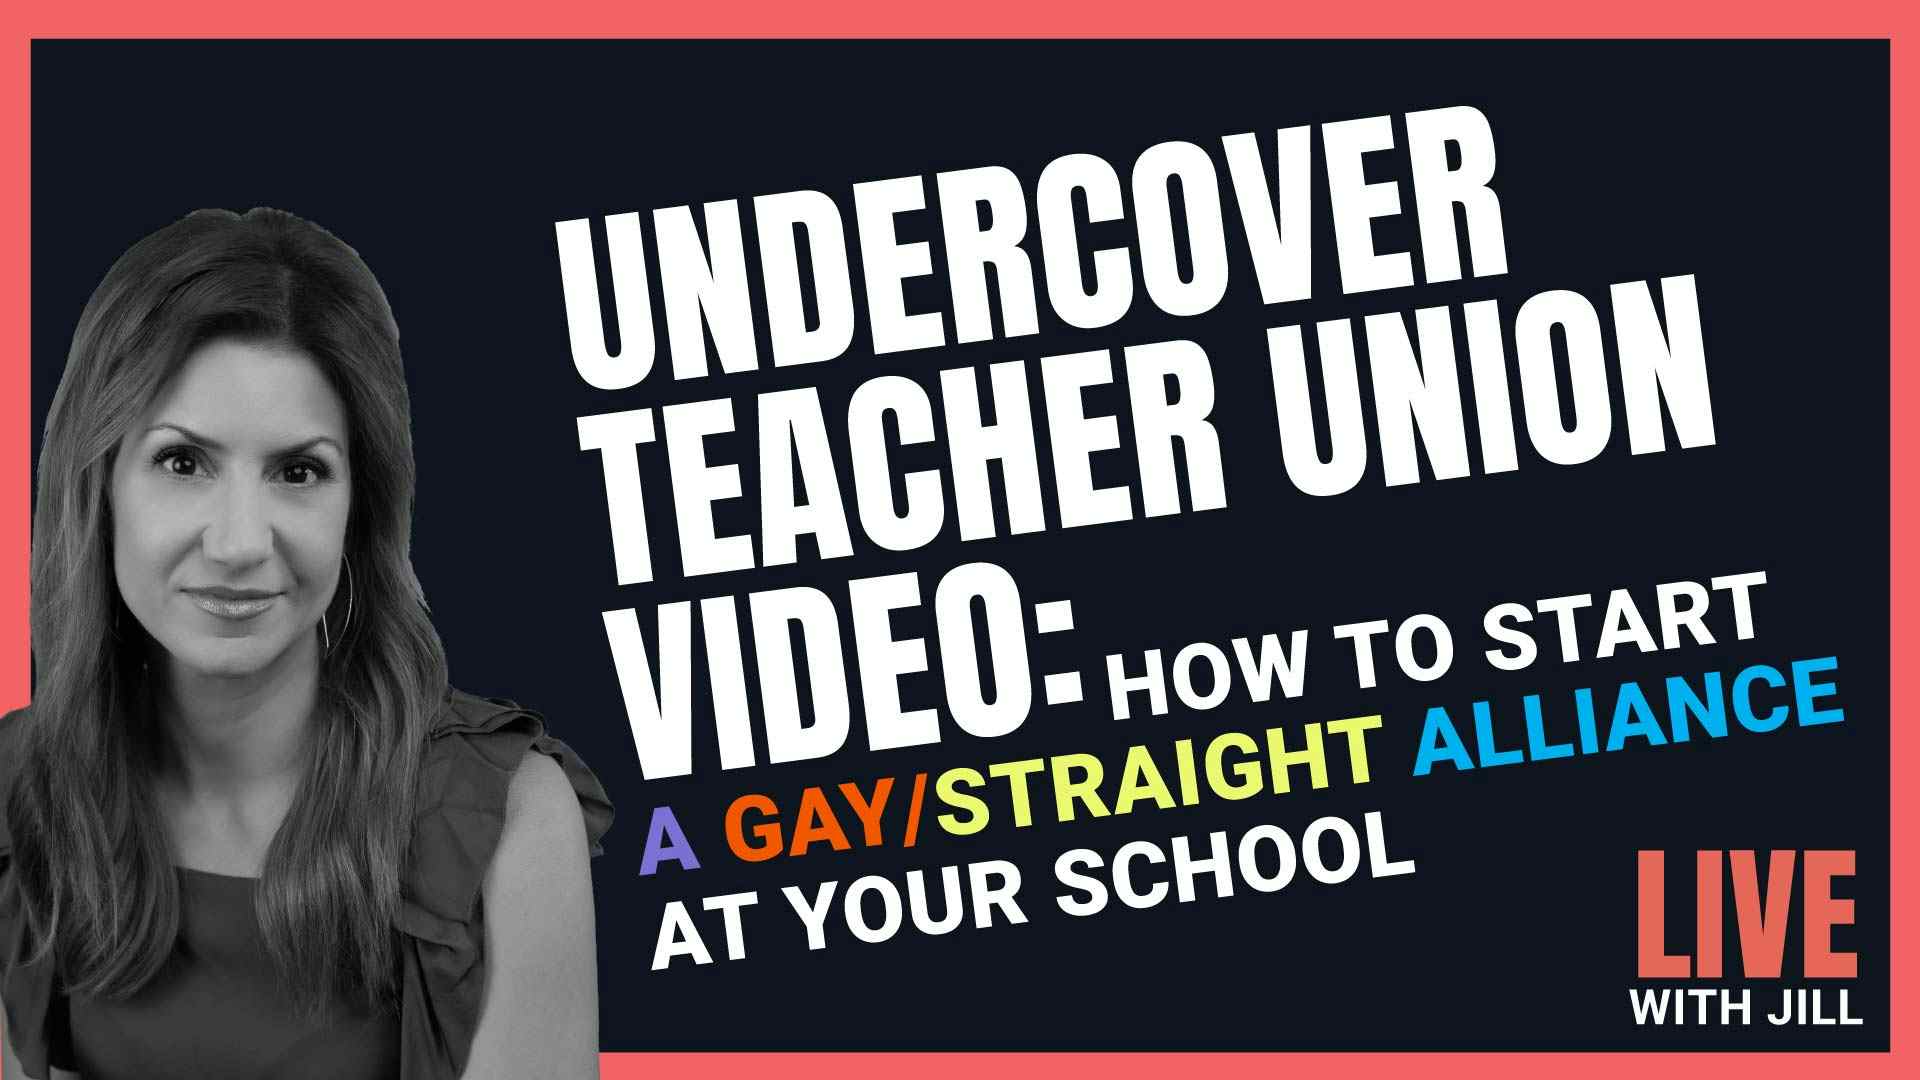 Undercover Teacher Union Video!